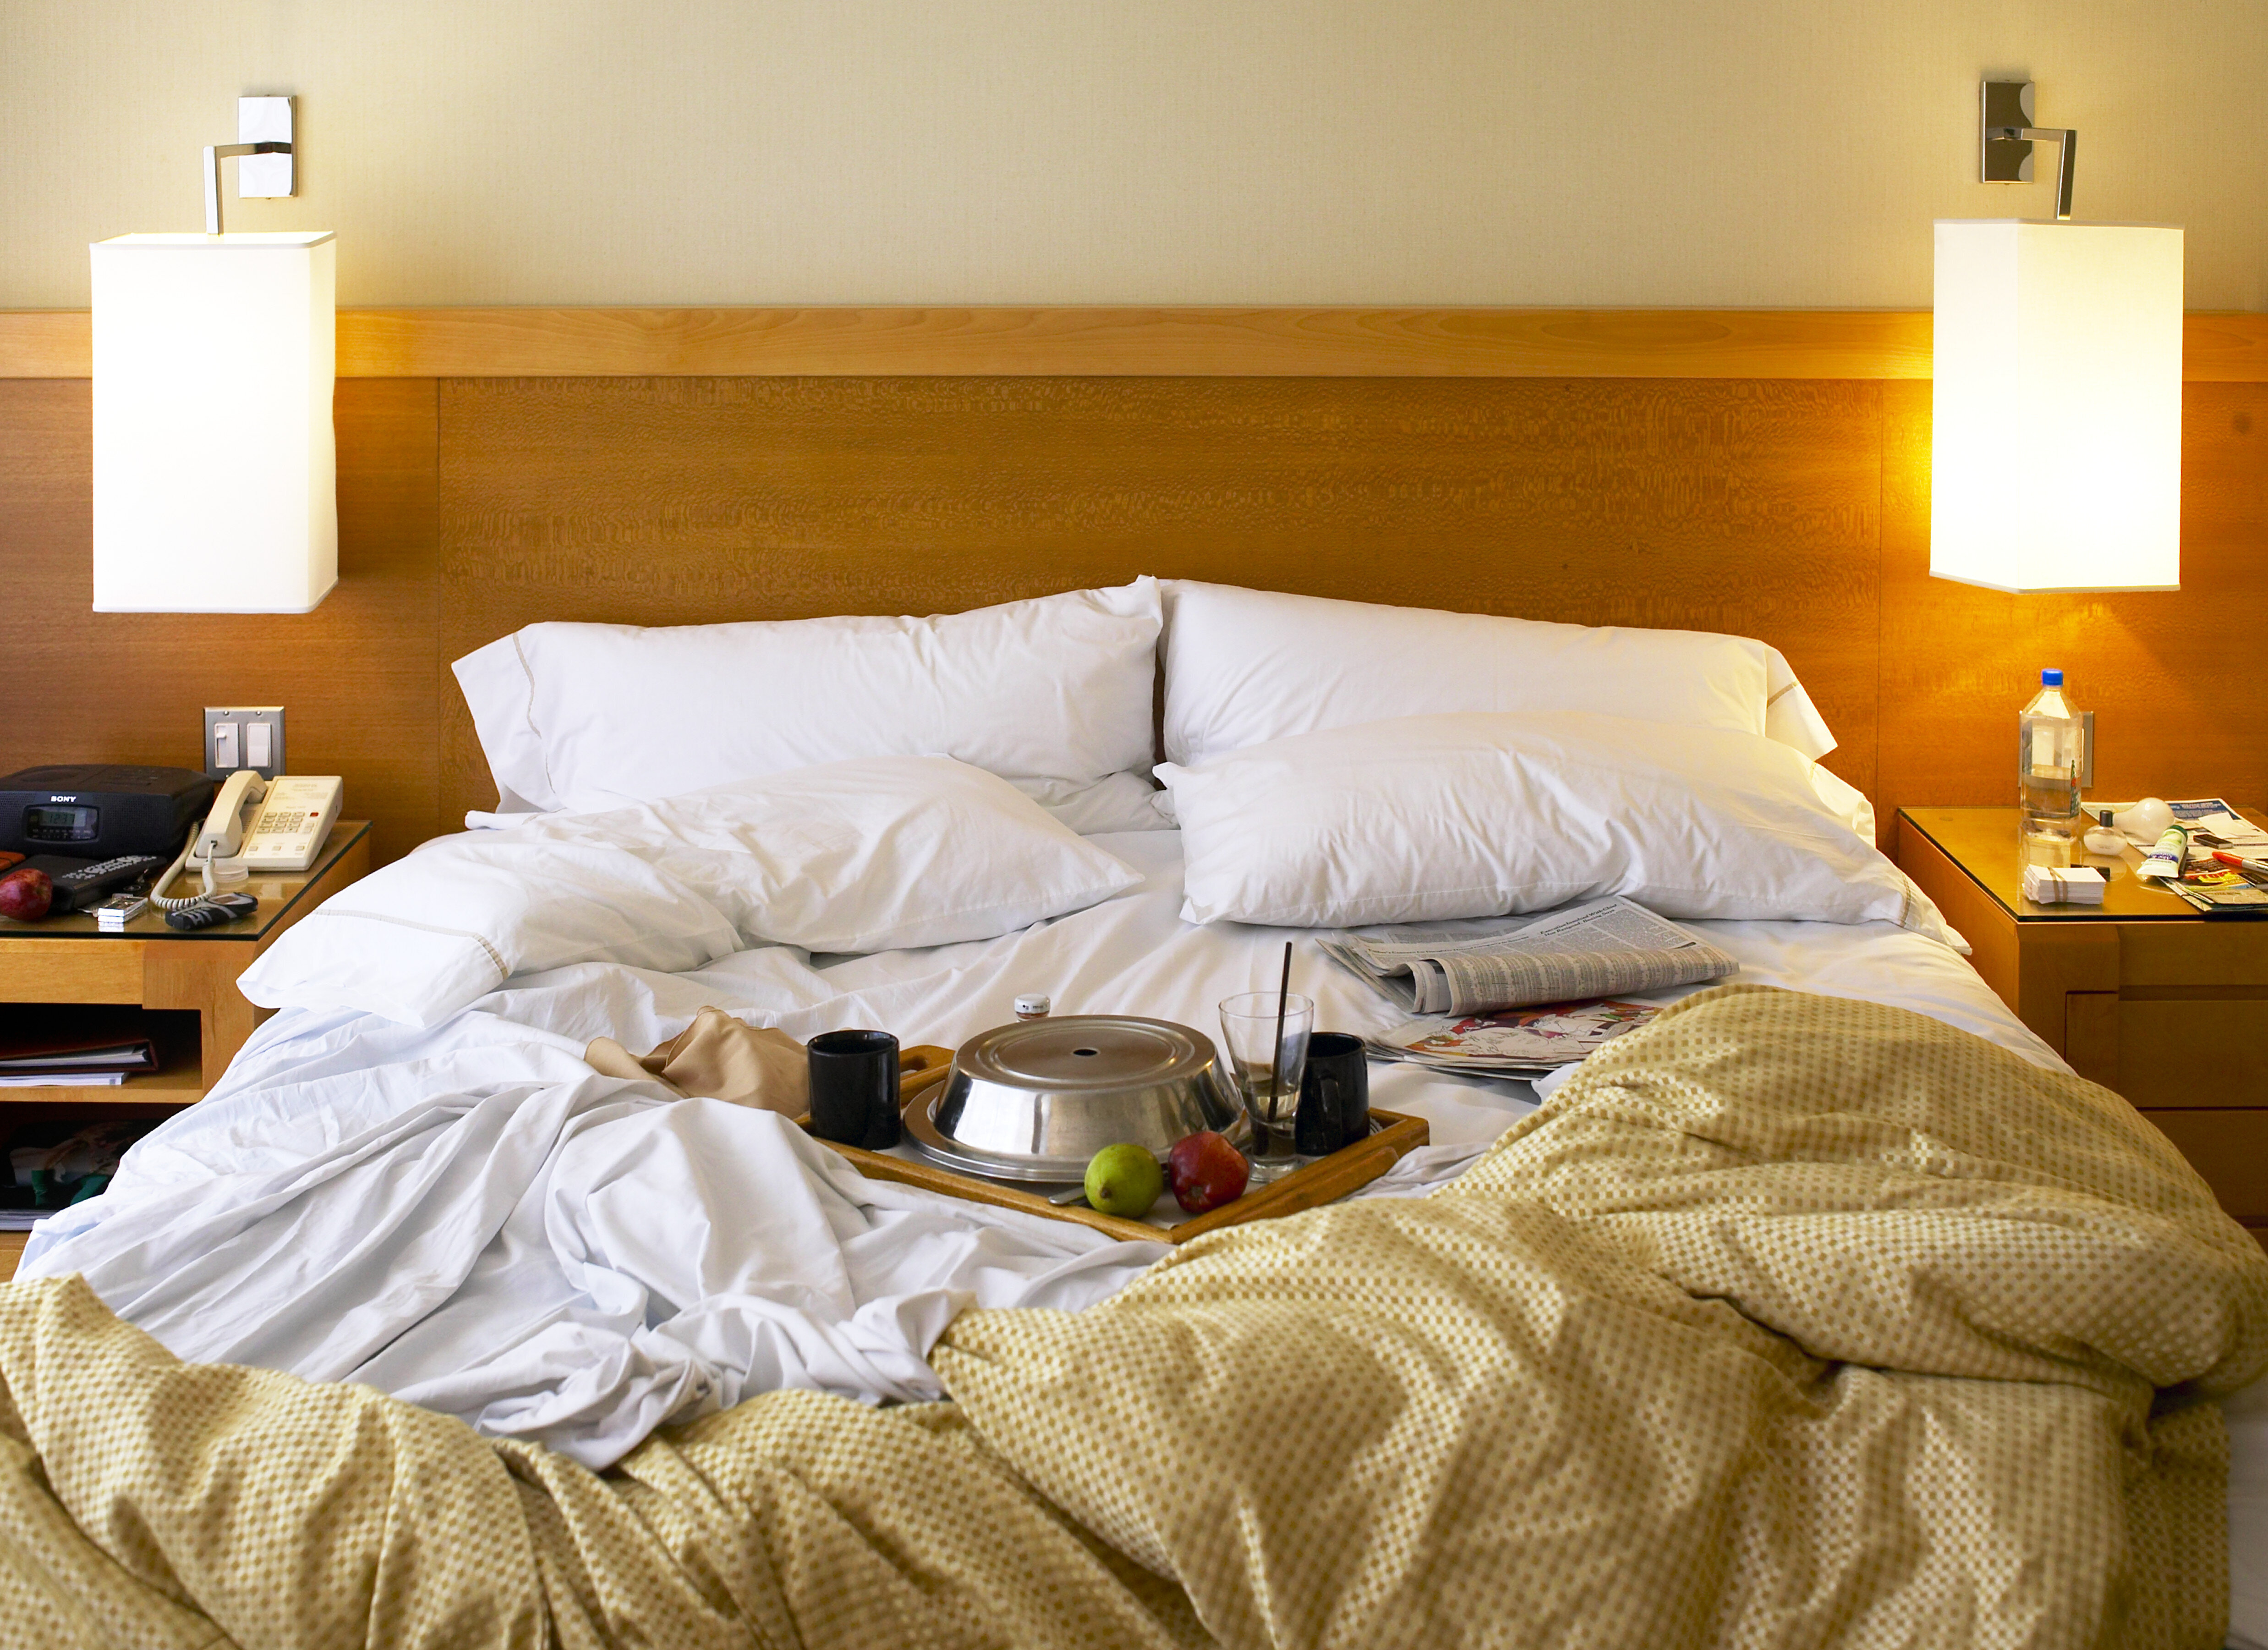 Vitaly in the bedroom. Кровать в отеле. Кровати для гостиниц. Грязная кровать в отеле. Кровать в гостиничном номере.